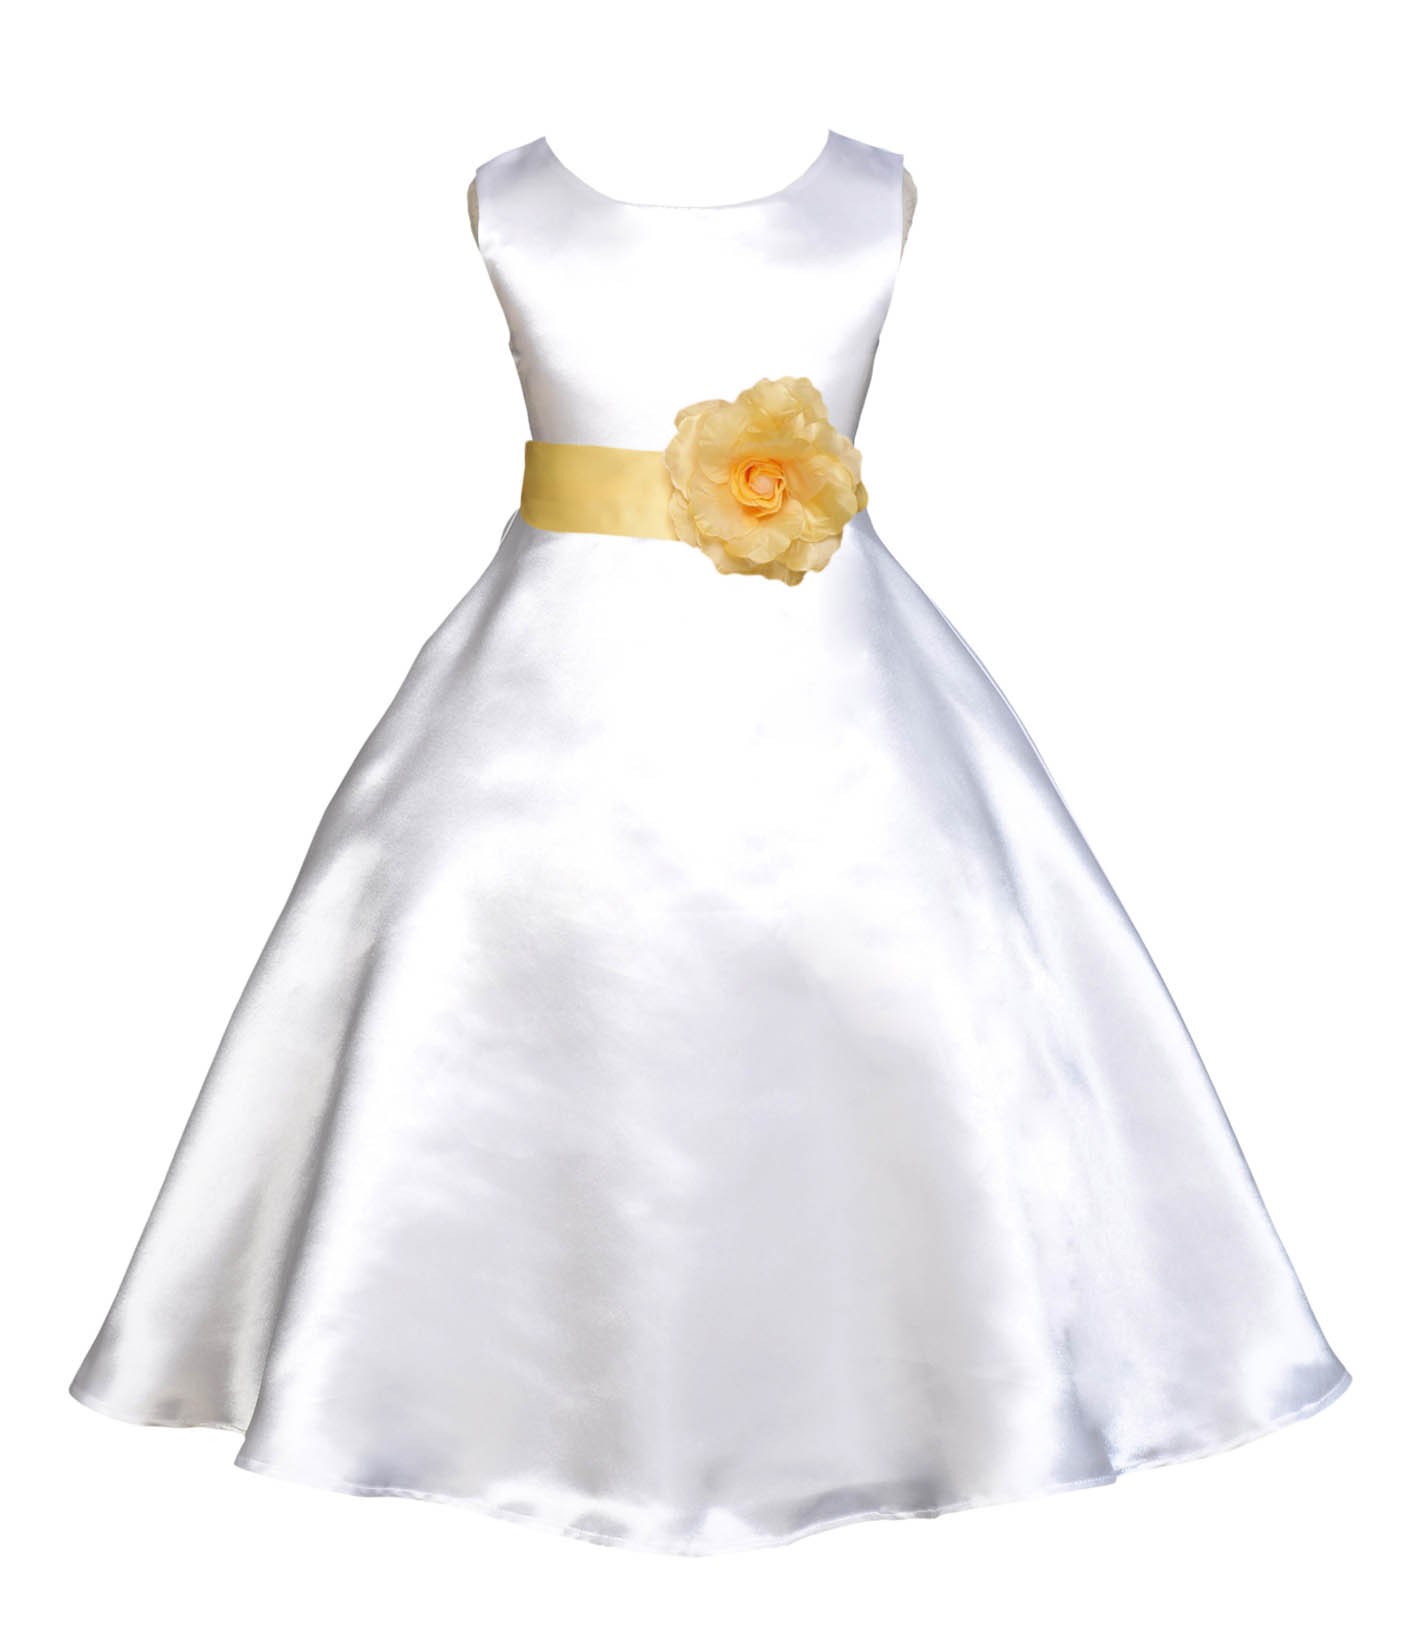 White/Canary A-Line Satin Flower Girl Dress Wedding Bridal 821T